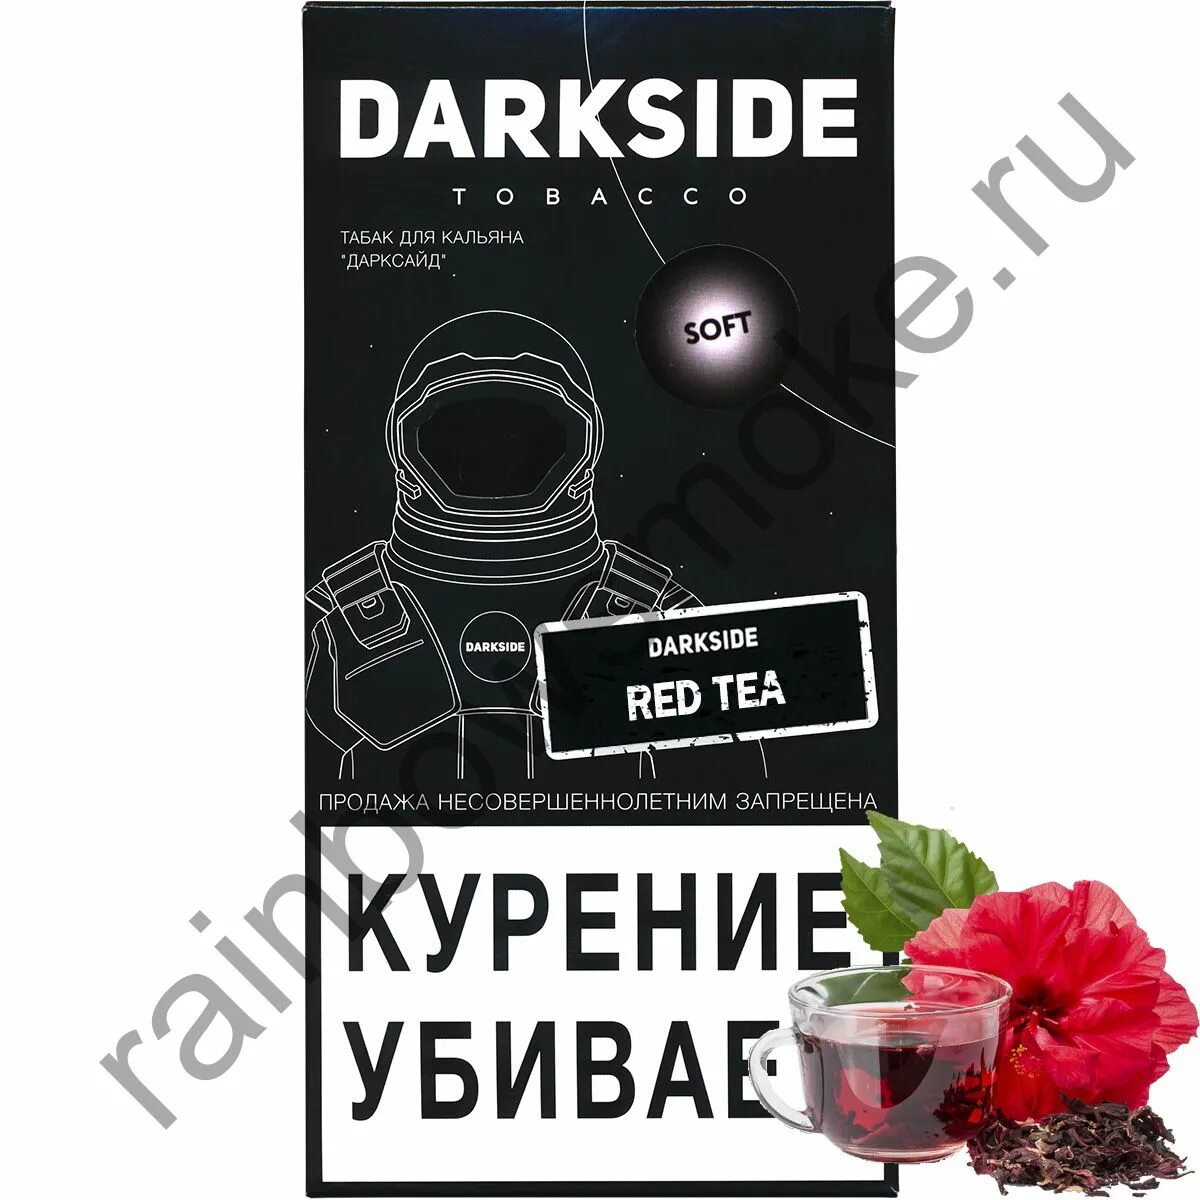 Дарксайд Red Tea. Red Tea Dark Side вкус. Ред ти Дарксайд вкус. Табак Dark Side Breaking Red. Red dark side